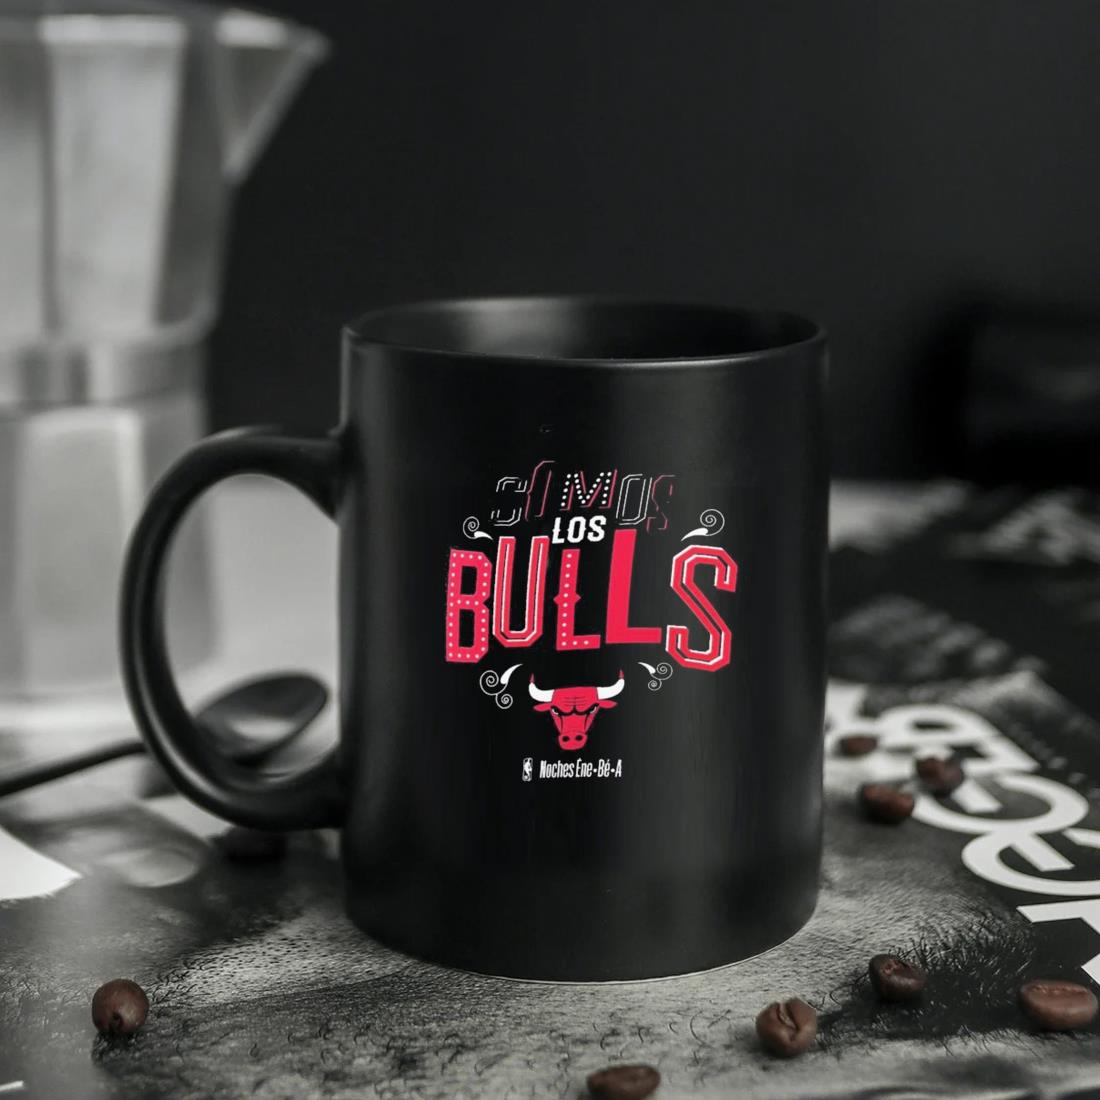 Somos Los Chicago Bulls Noches Ene-be-a Mug ten